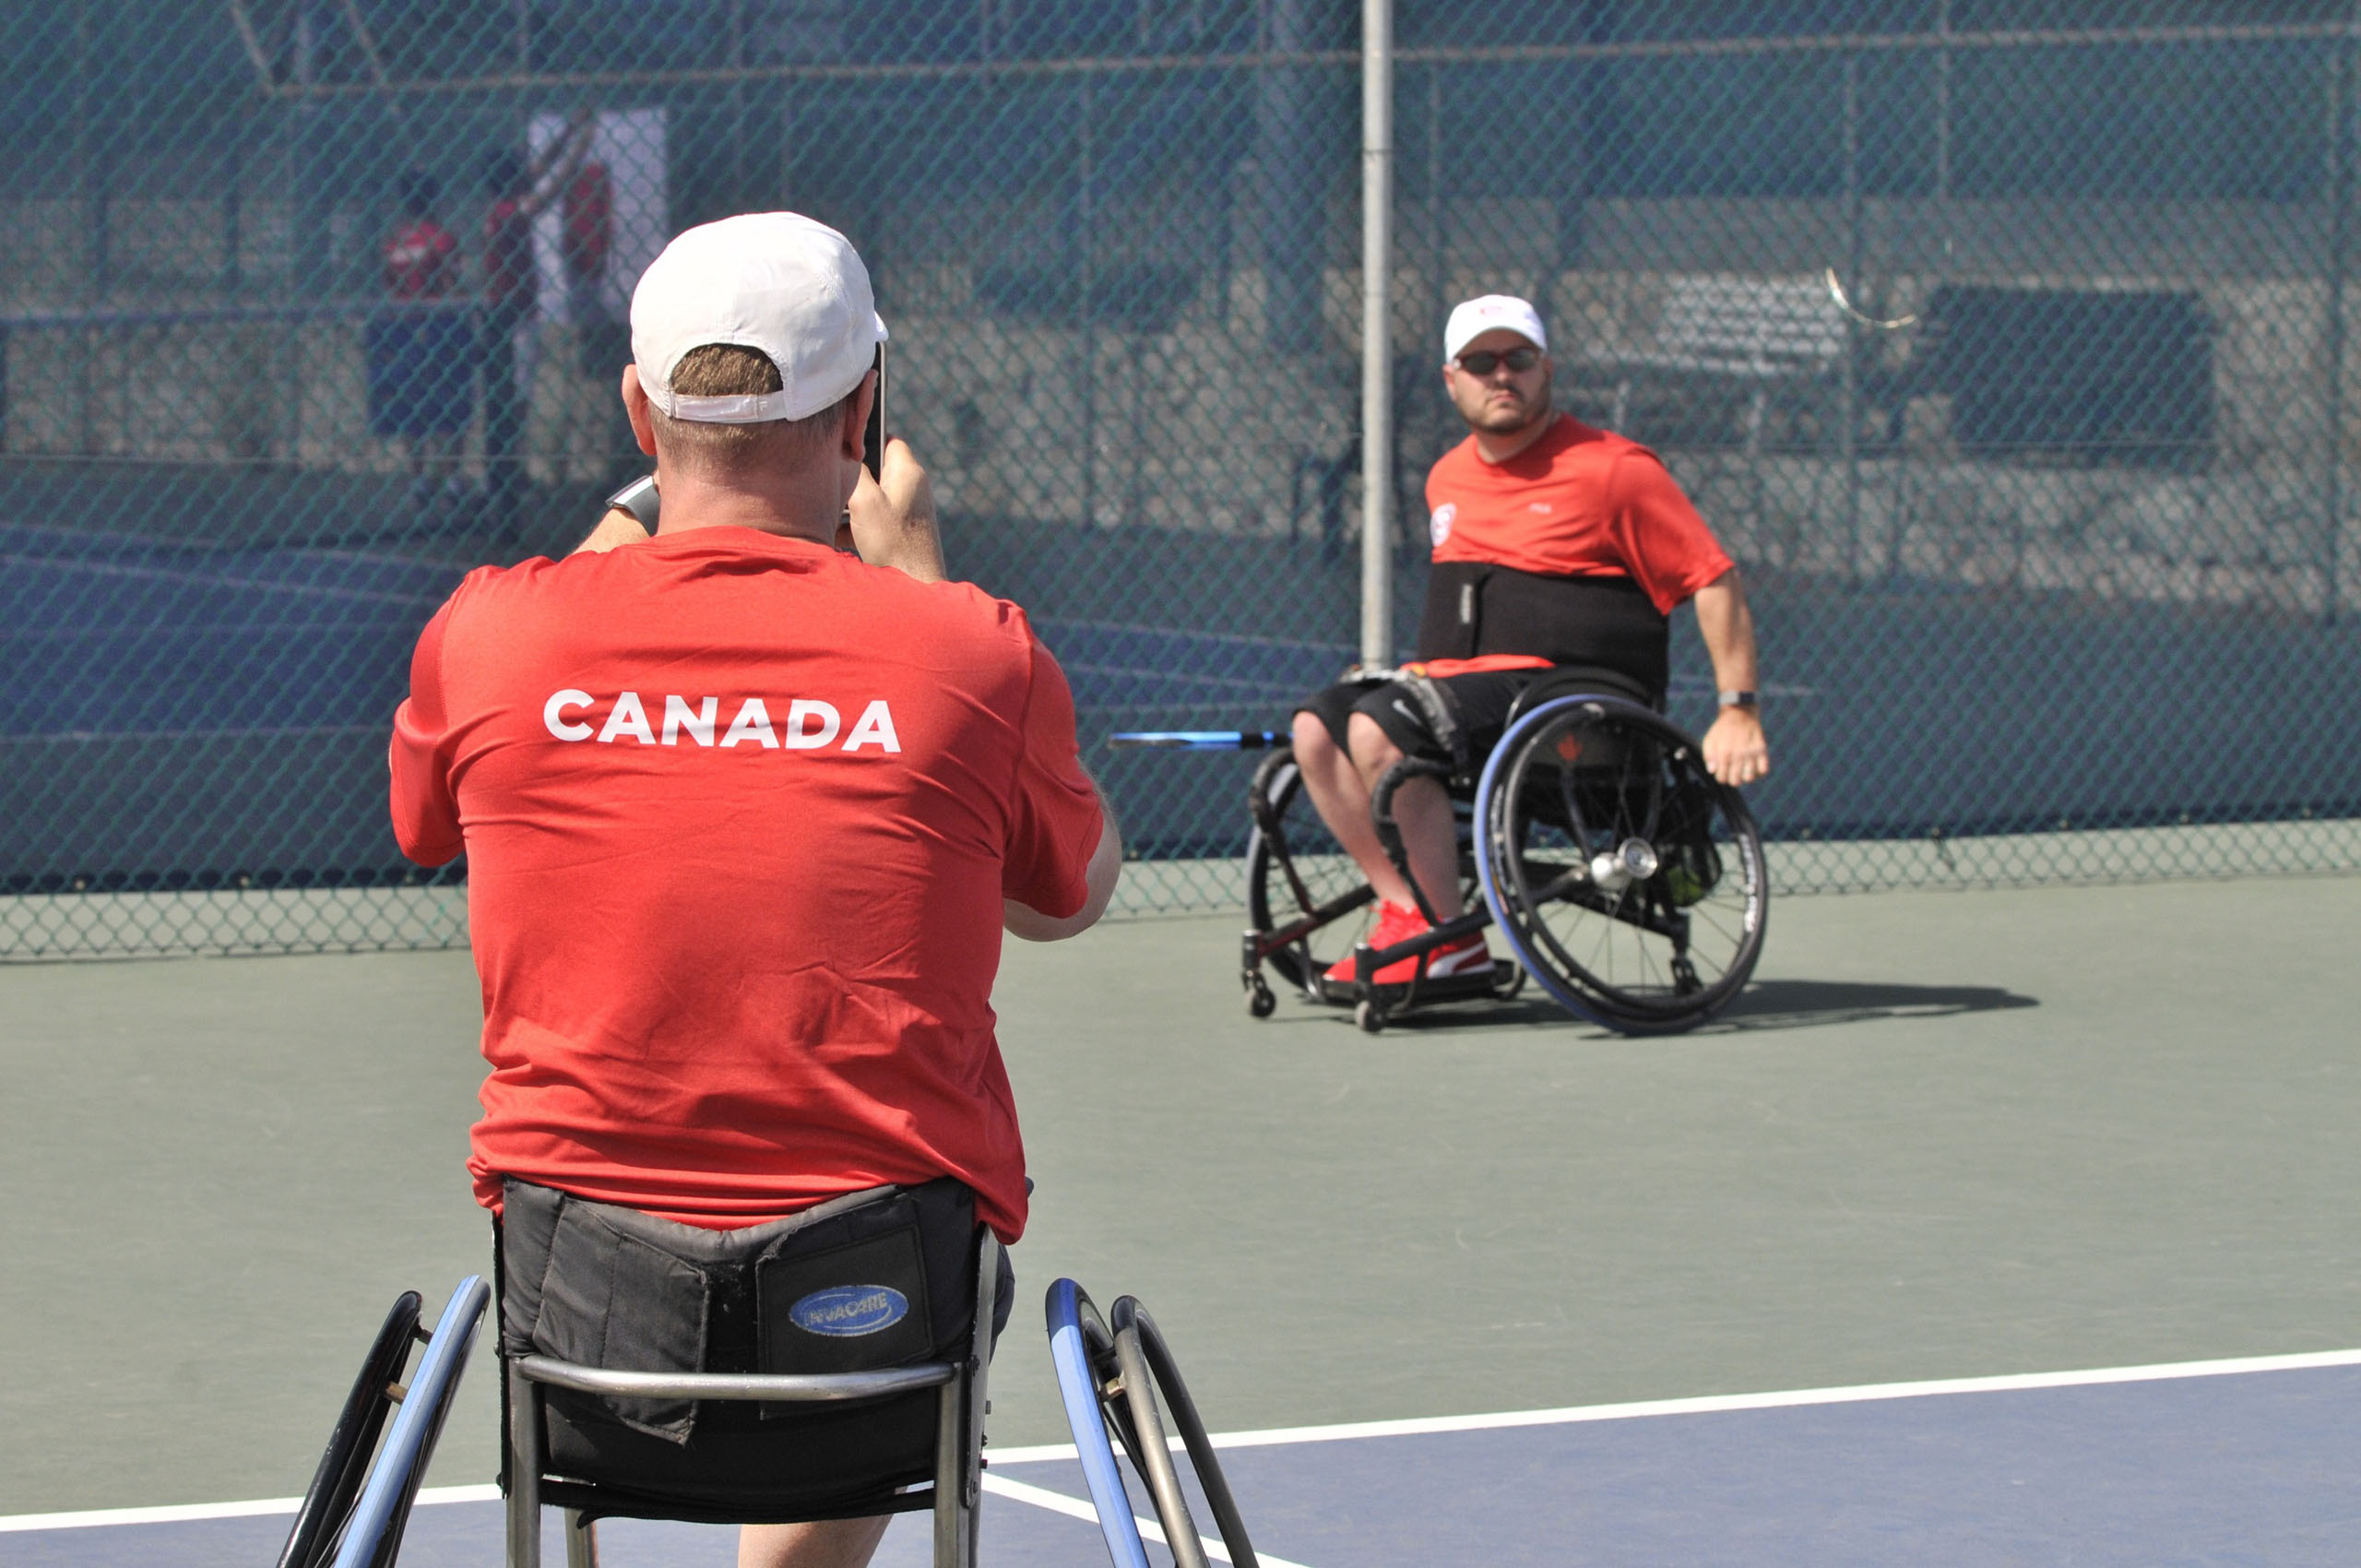 wheelchair tennis players